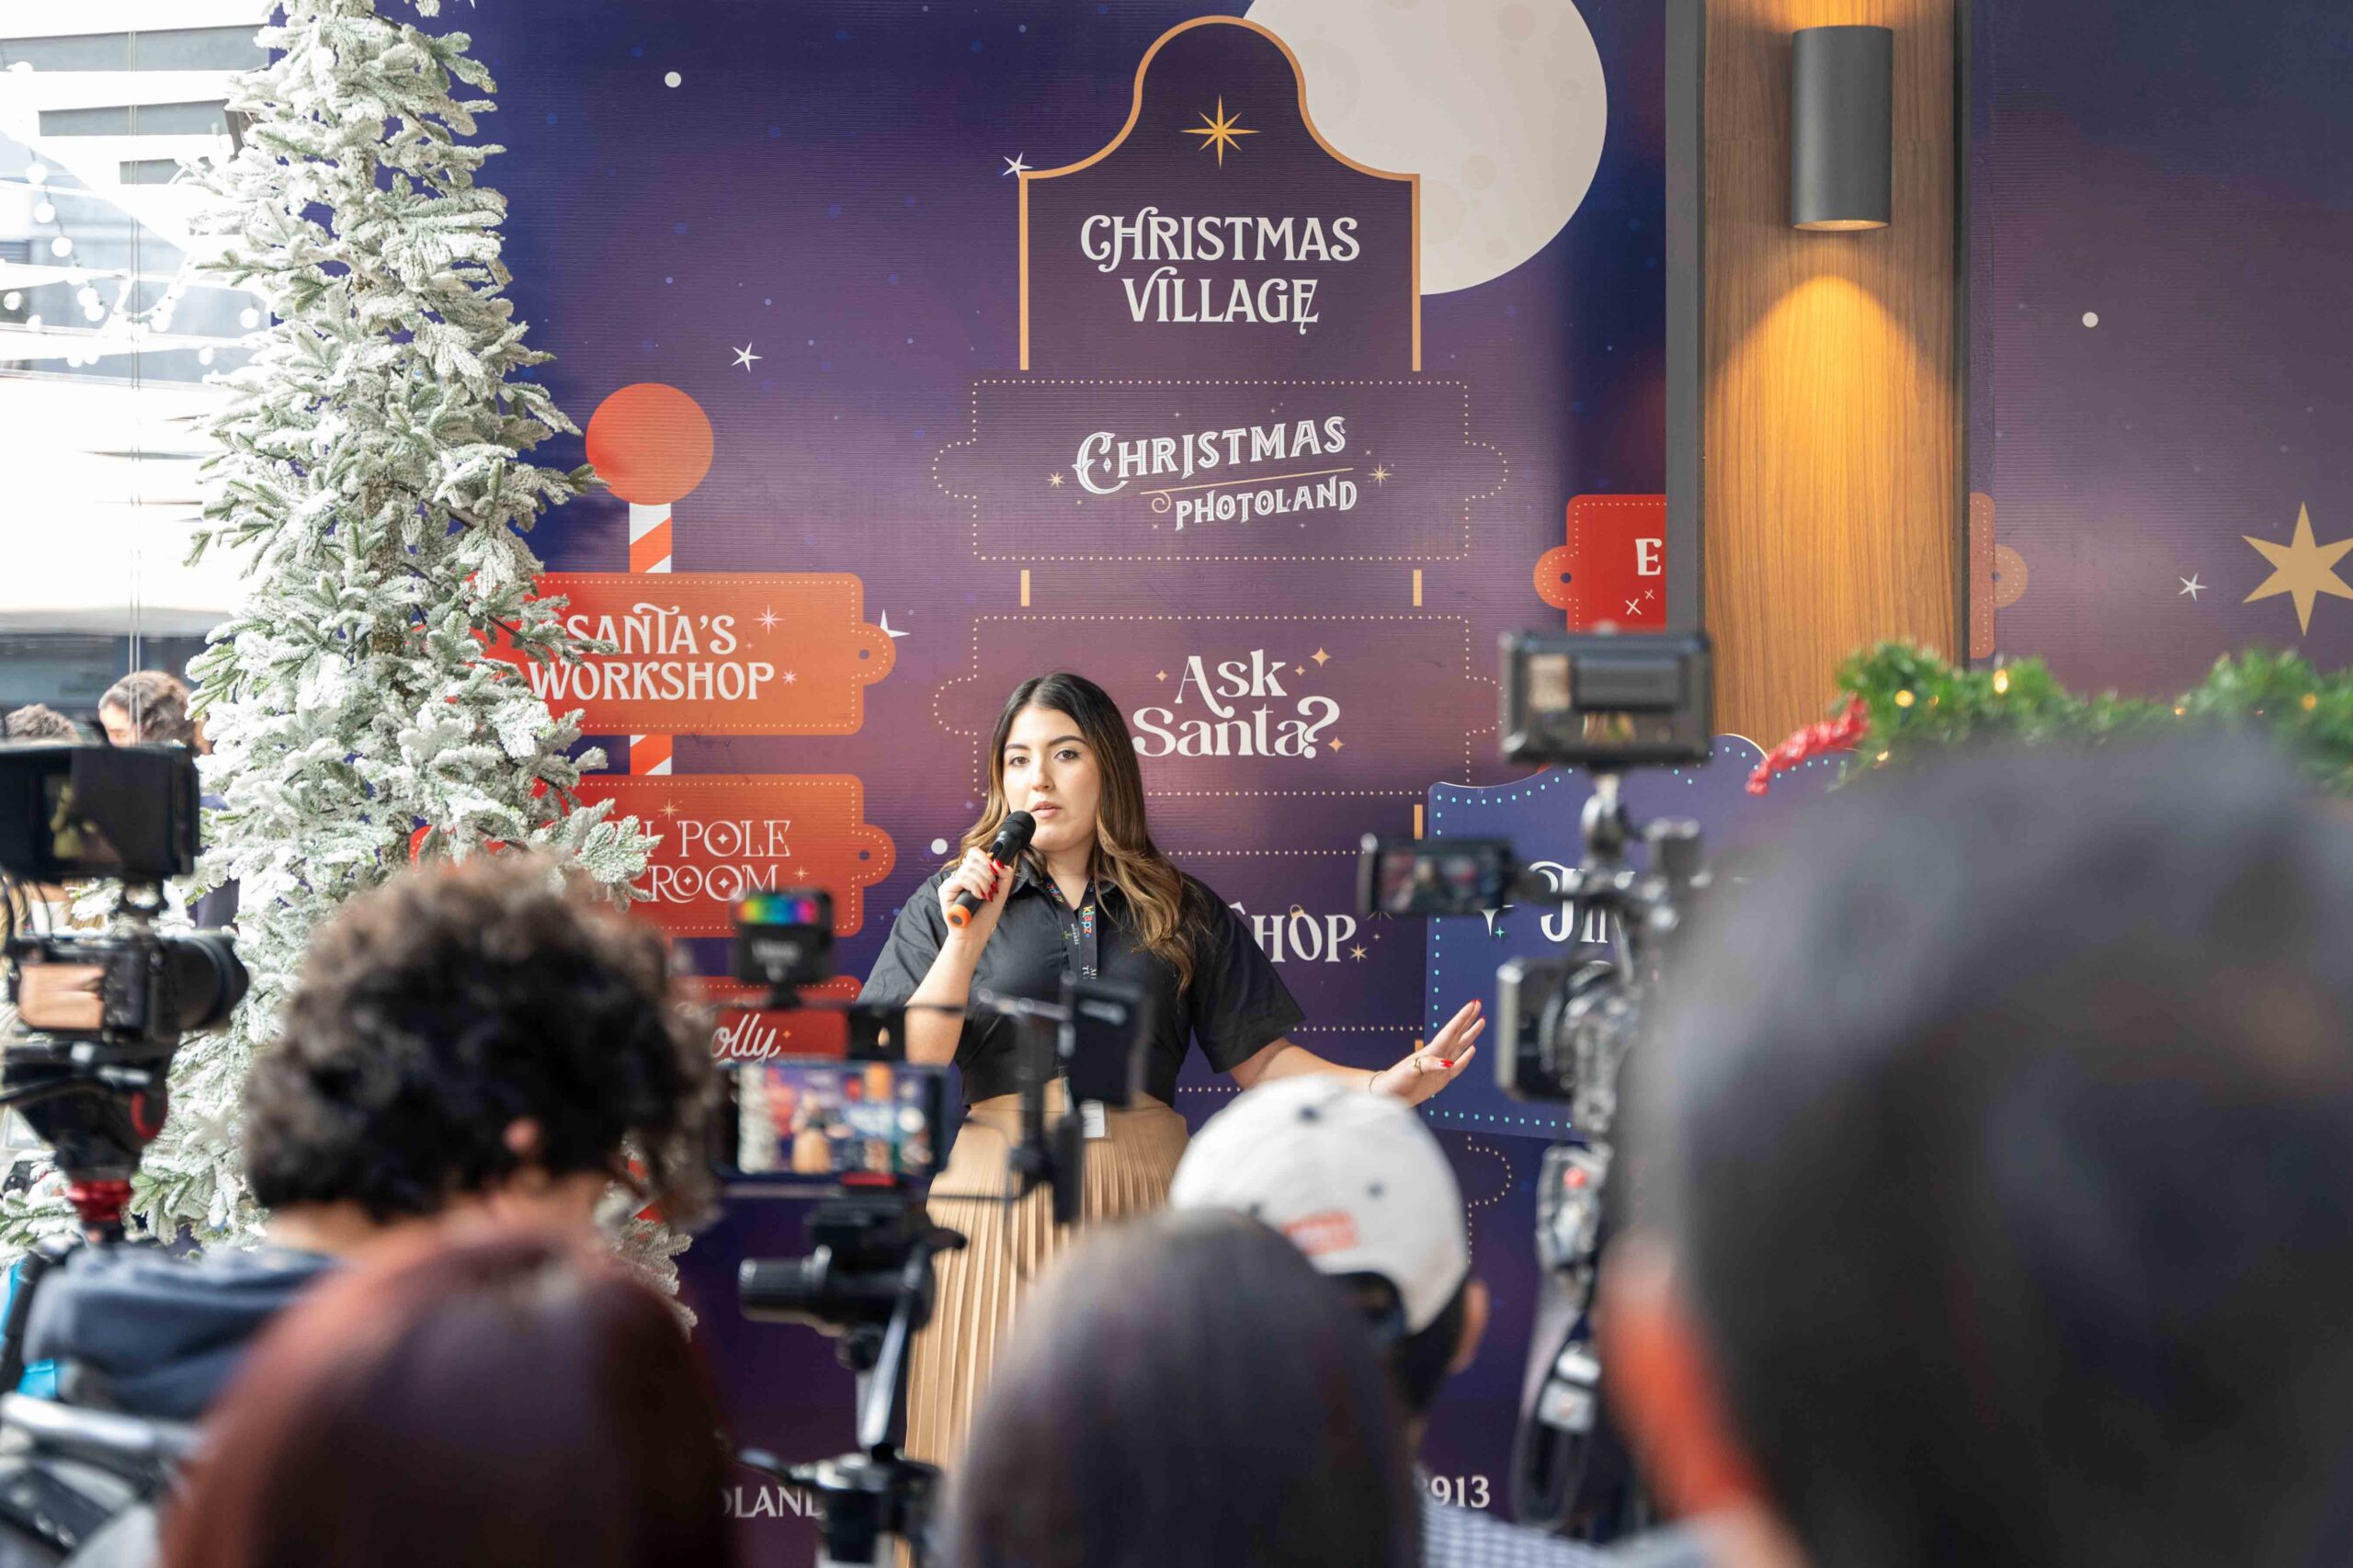 Christmas Village: Vive la magia navideña en Spazio